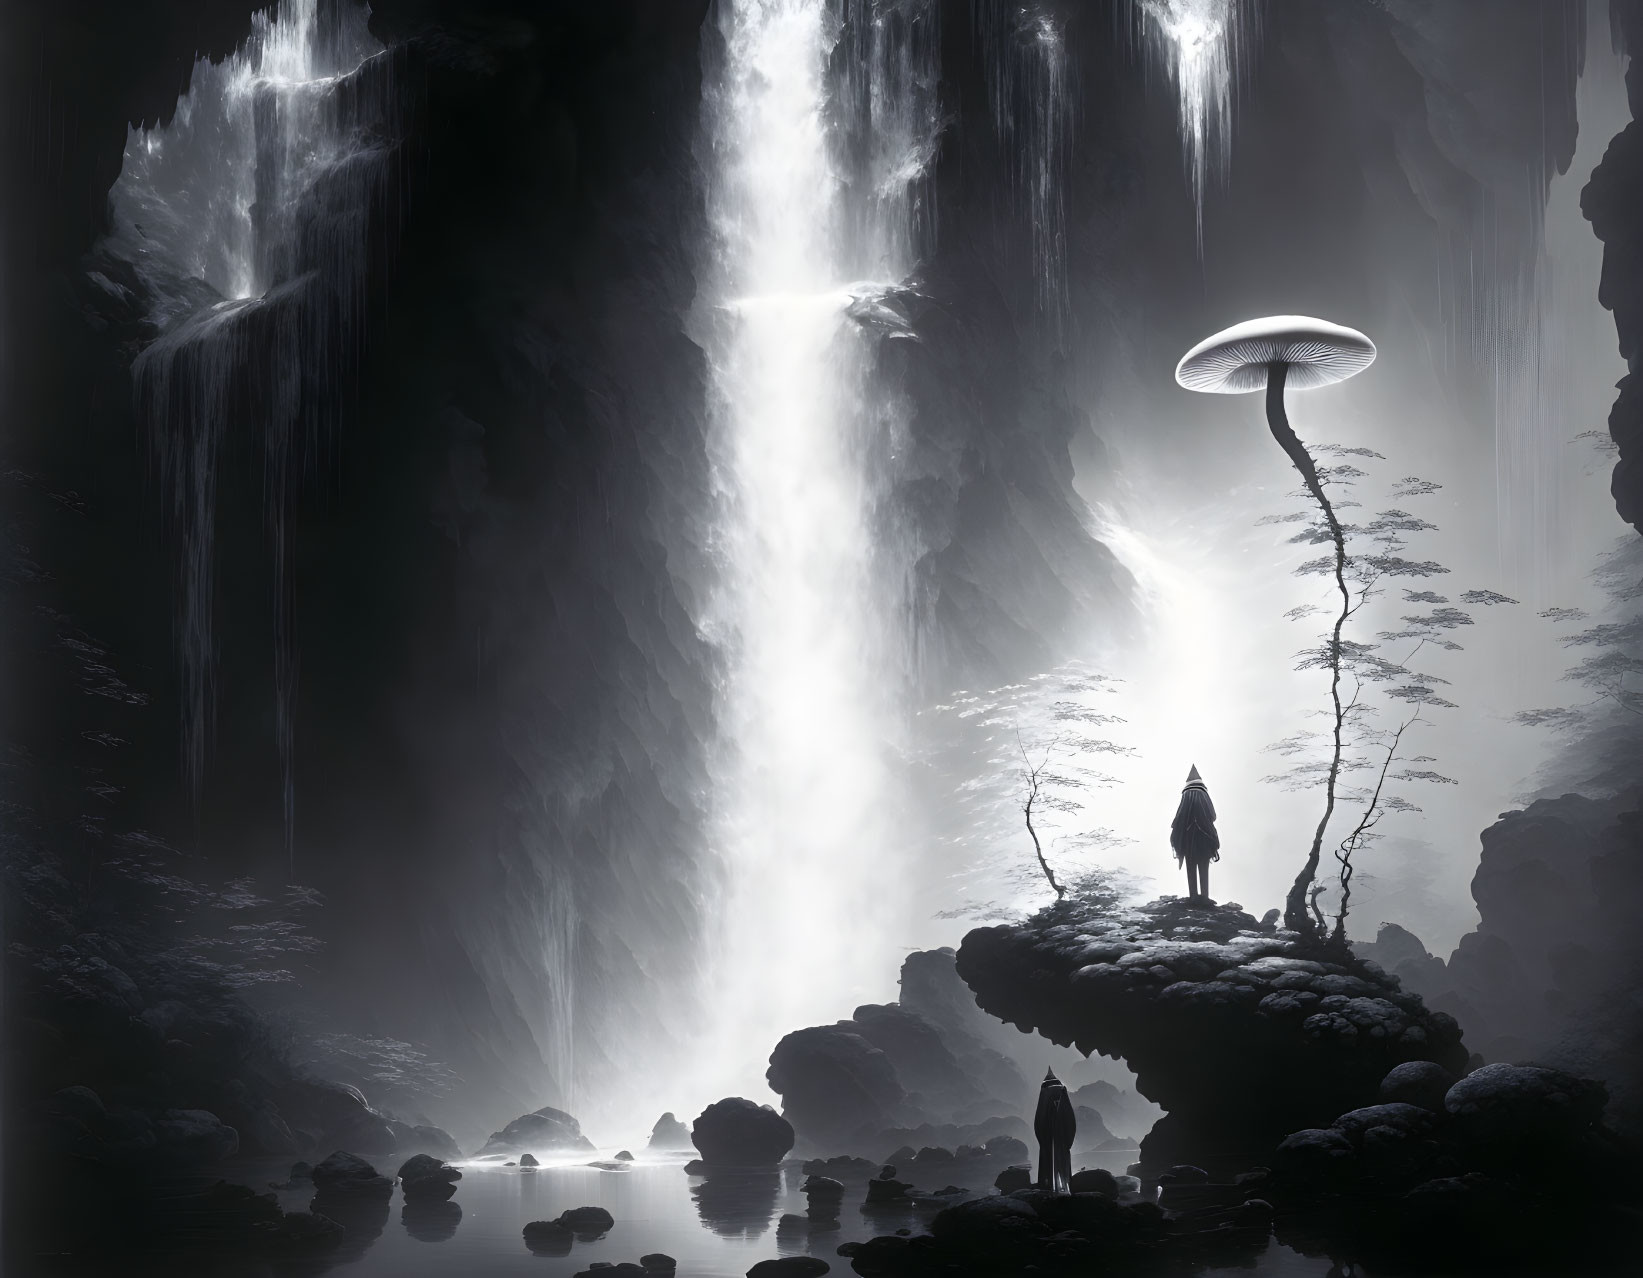 Monochromatic mystical scene with figures, glowing mushroom, waterfalls.